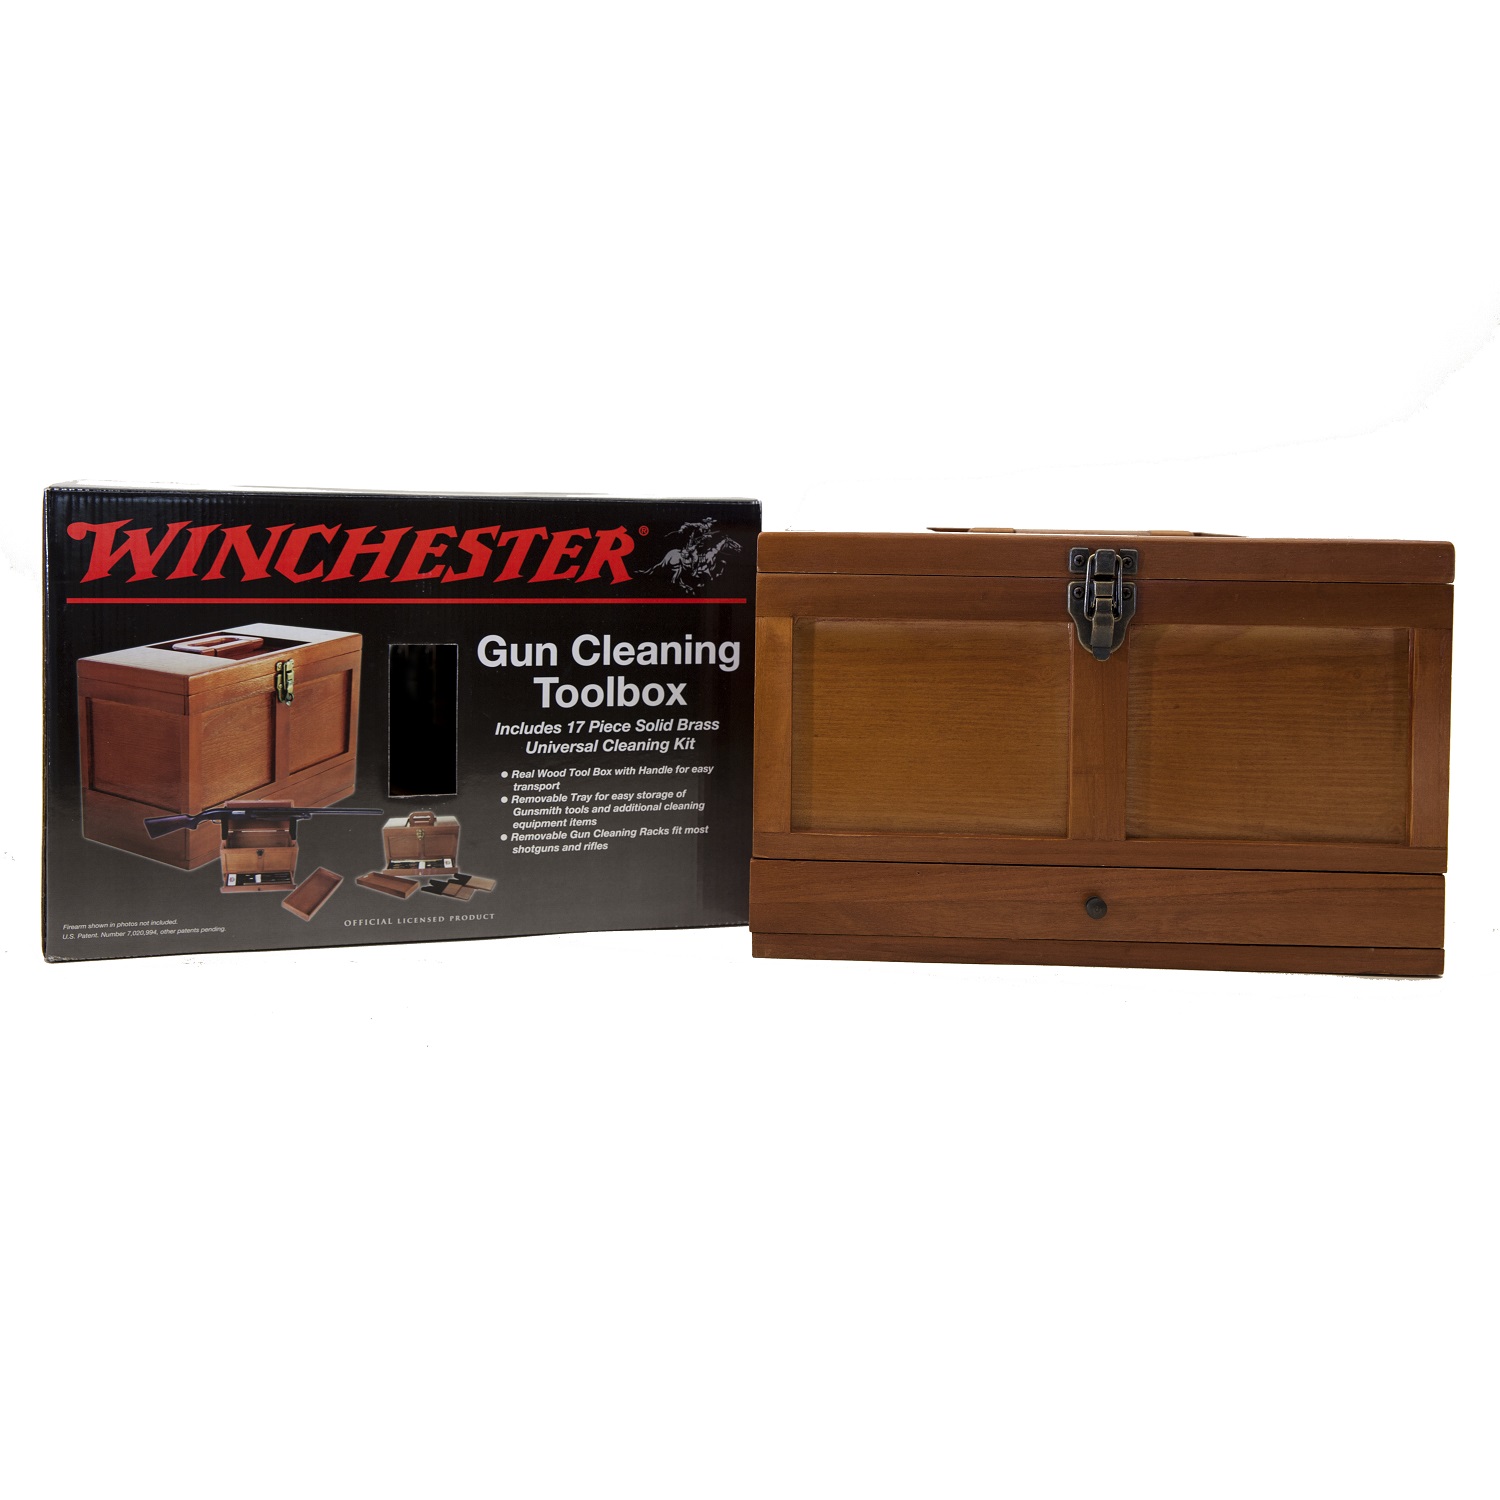 https://op1.0ps.us/original/opplanet-winchester-gunmaster-toolbox-17-piece-gun-cleaning-kit-1004904-main